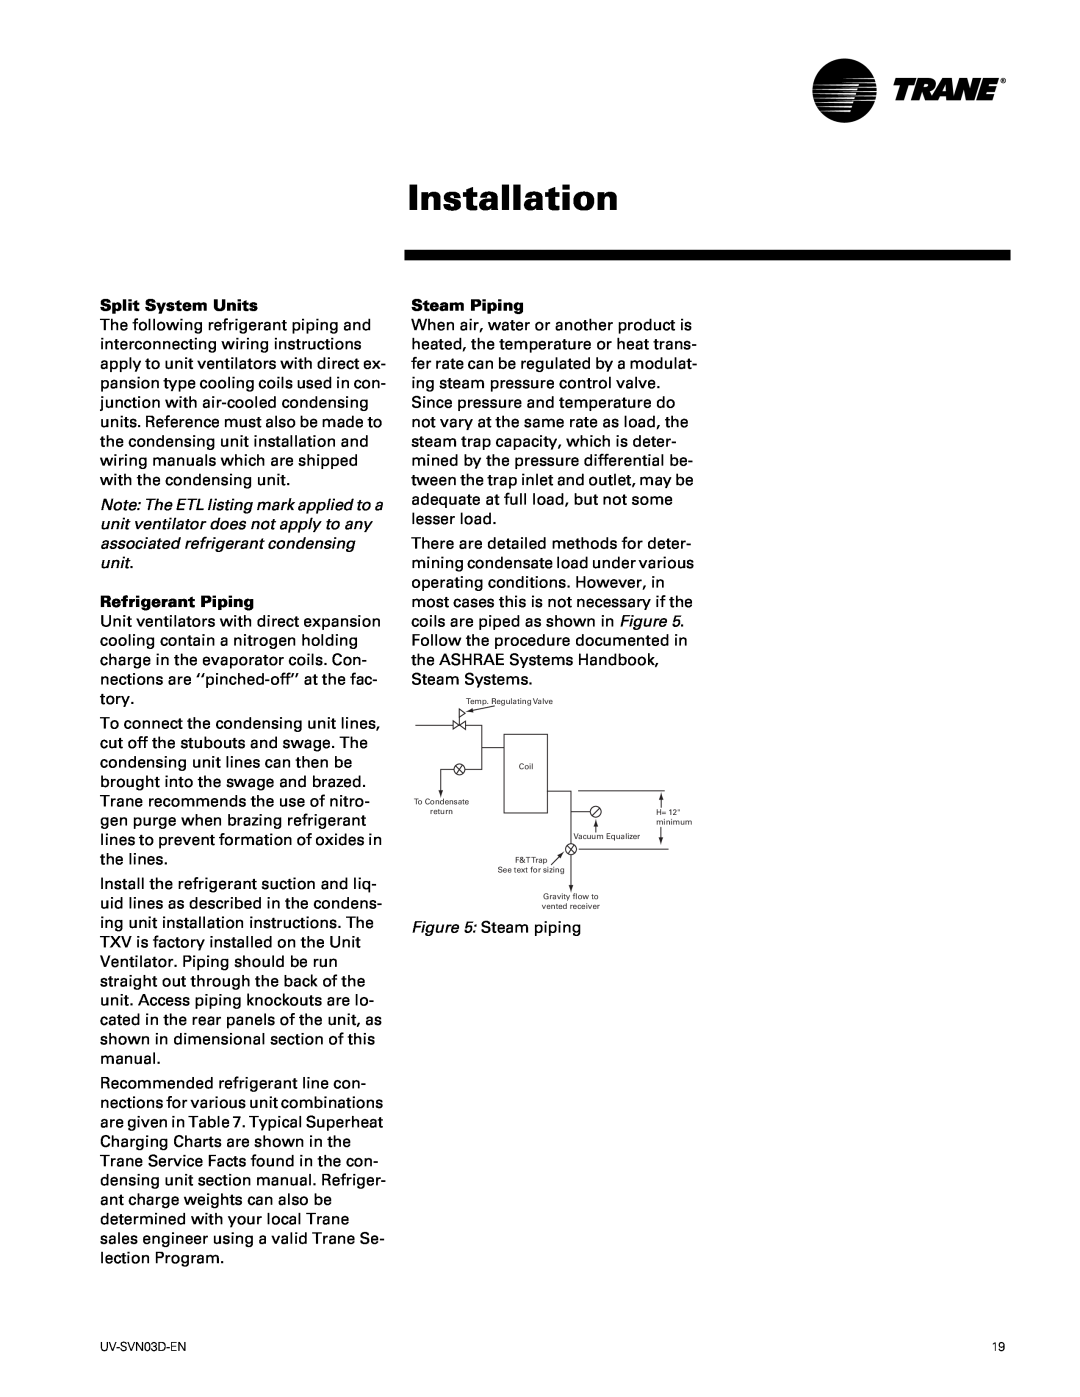 Trane 750 CFM, 1500 CFM manual Installation, Split System Units, Refrigerant Piping, Steam Piping 